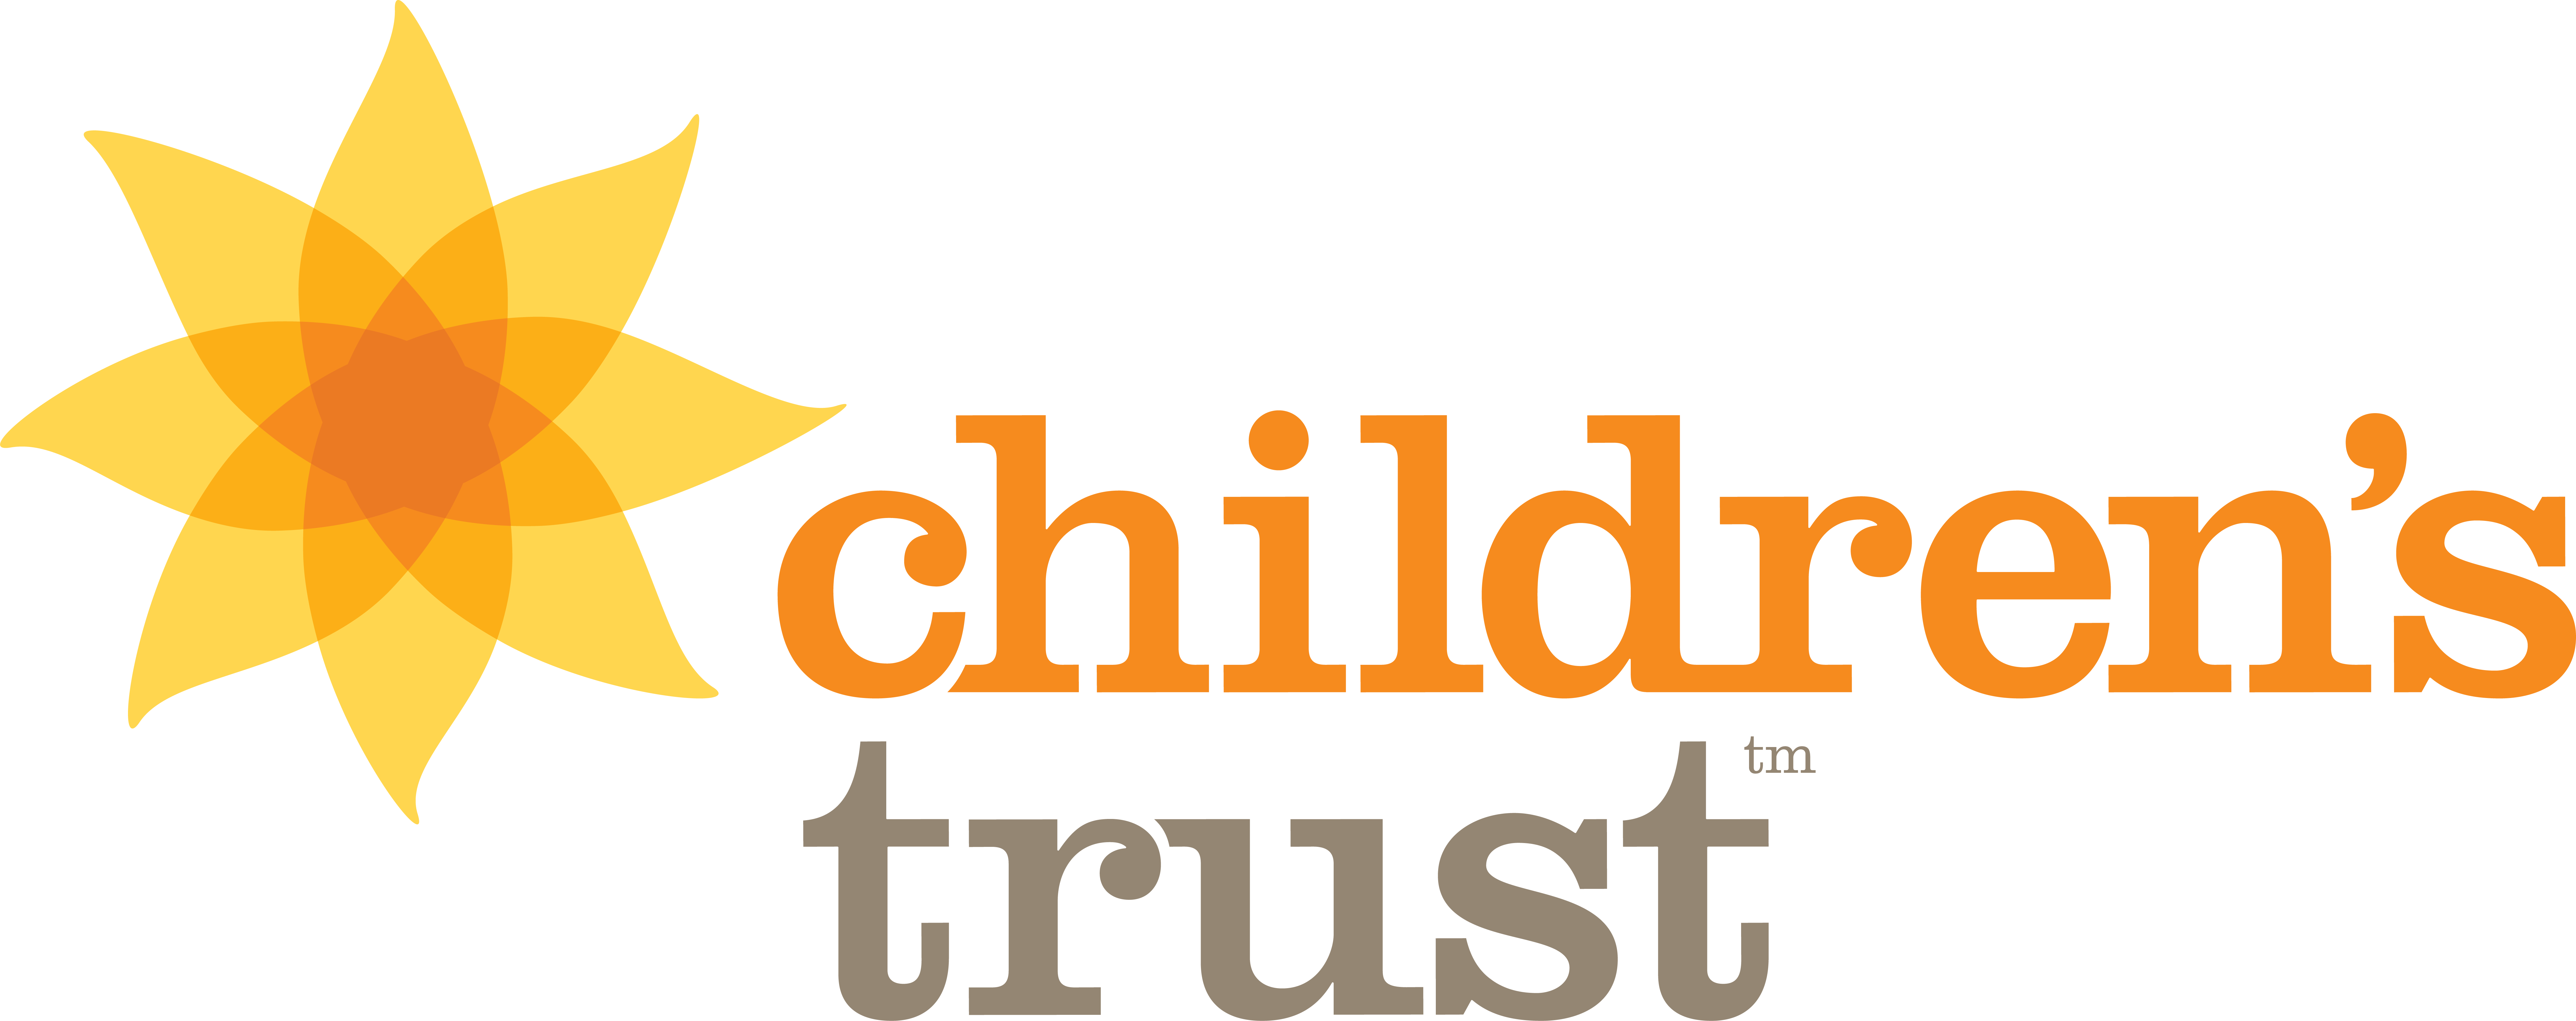 Children's Trust - Strengthening Families